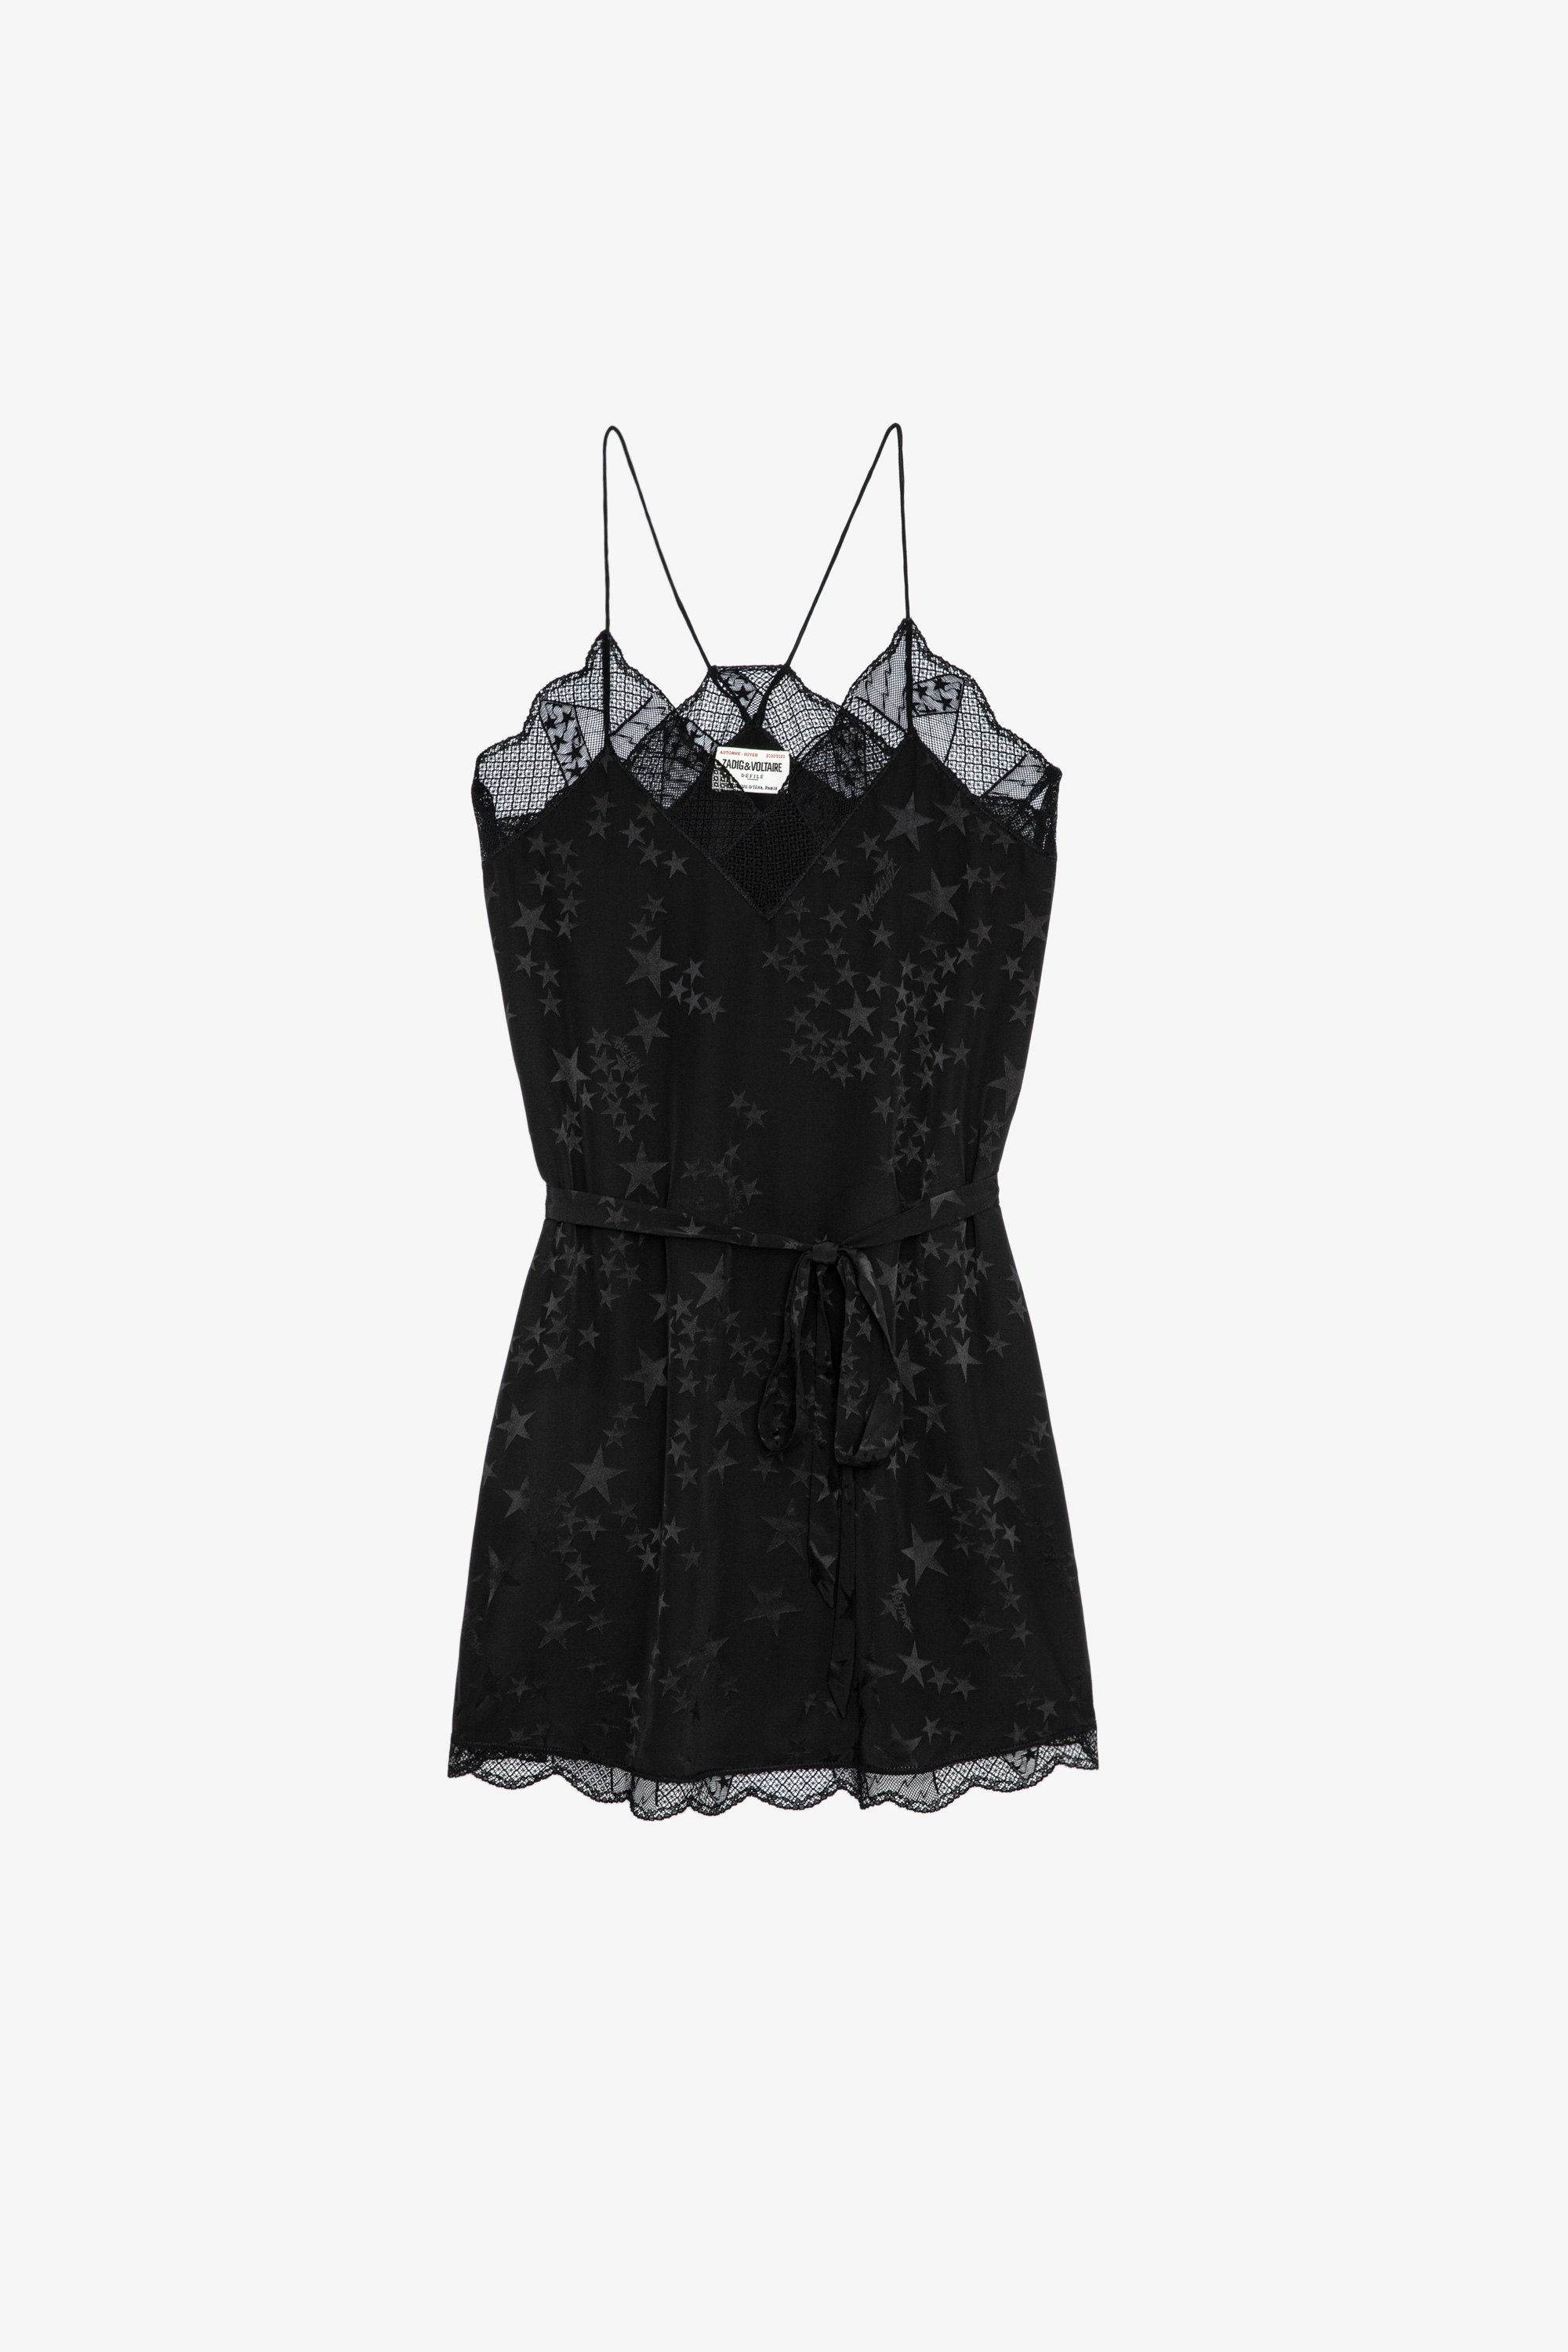 Ristyz Stars Silk Dress Women’s star-studded black silk jacquard mini dress tied at the waist with lace trim